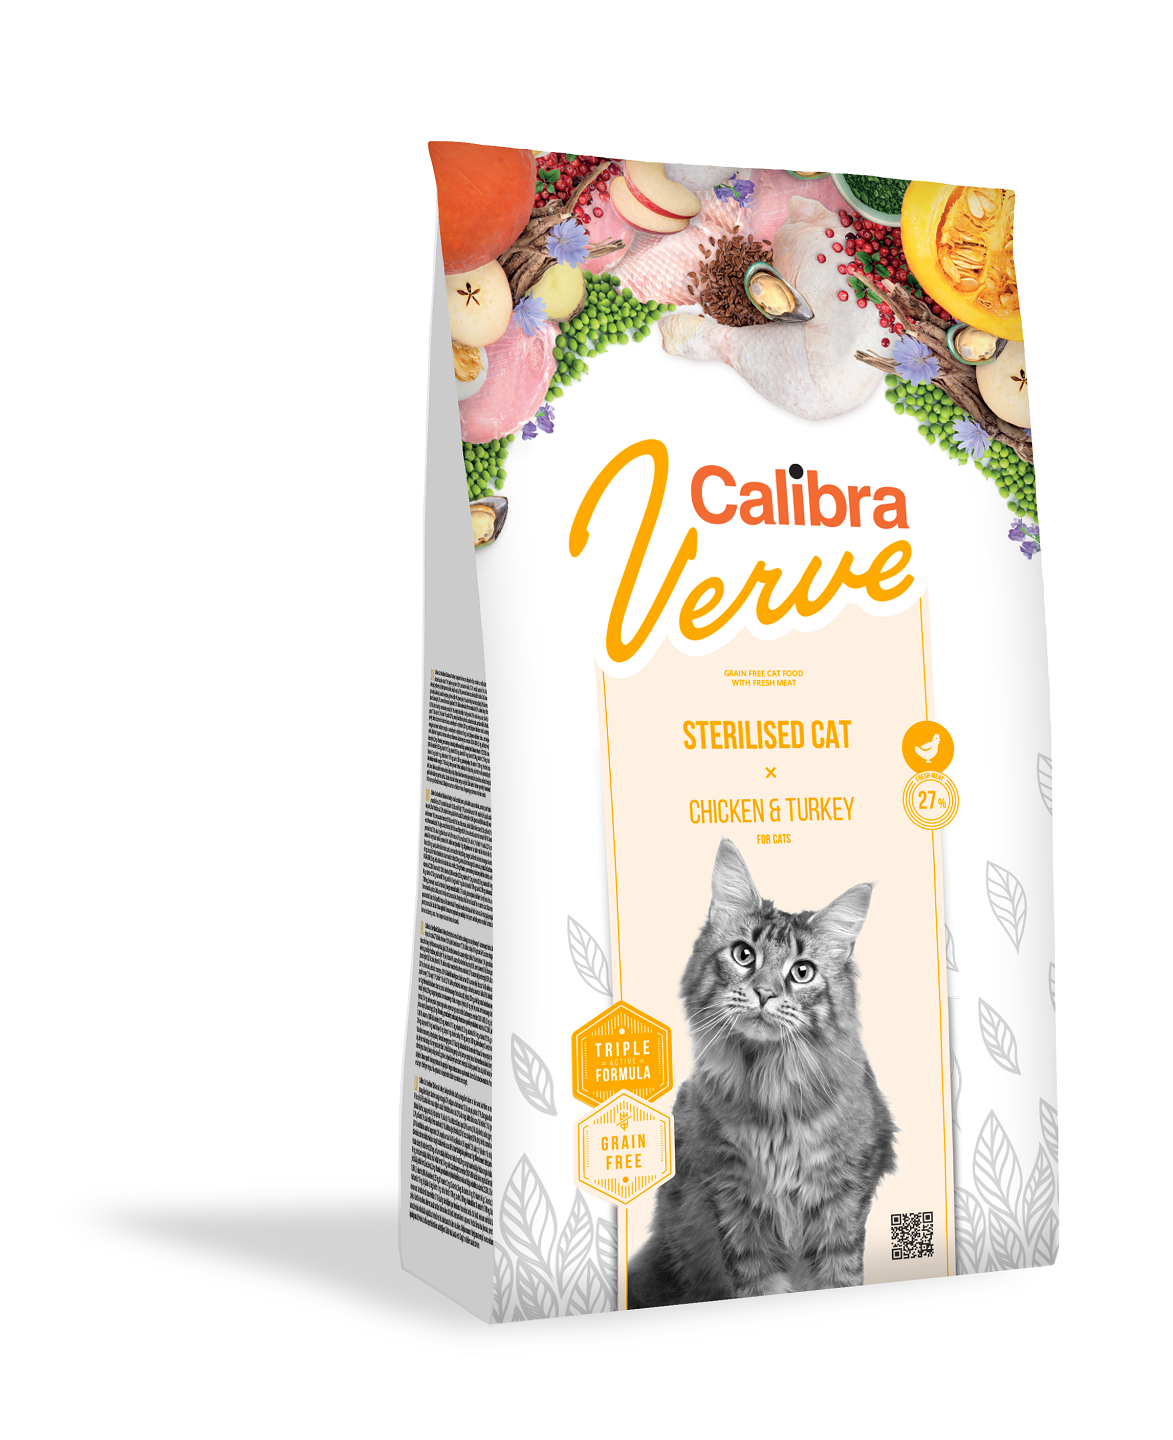 Calibra Cat Verve Grain Free Sterilised, Chicken & Turkey, 3.5 kg Calibra